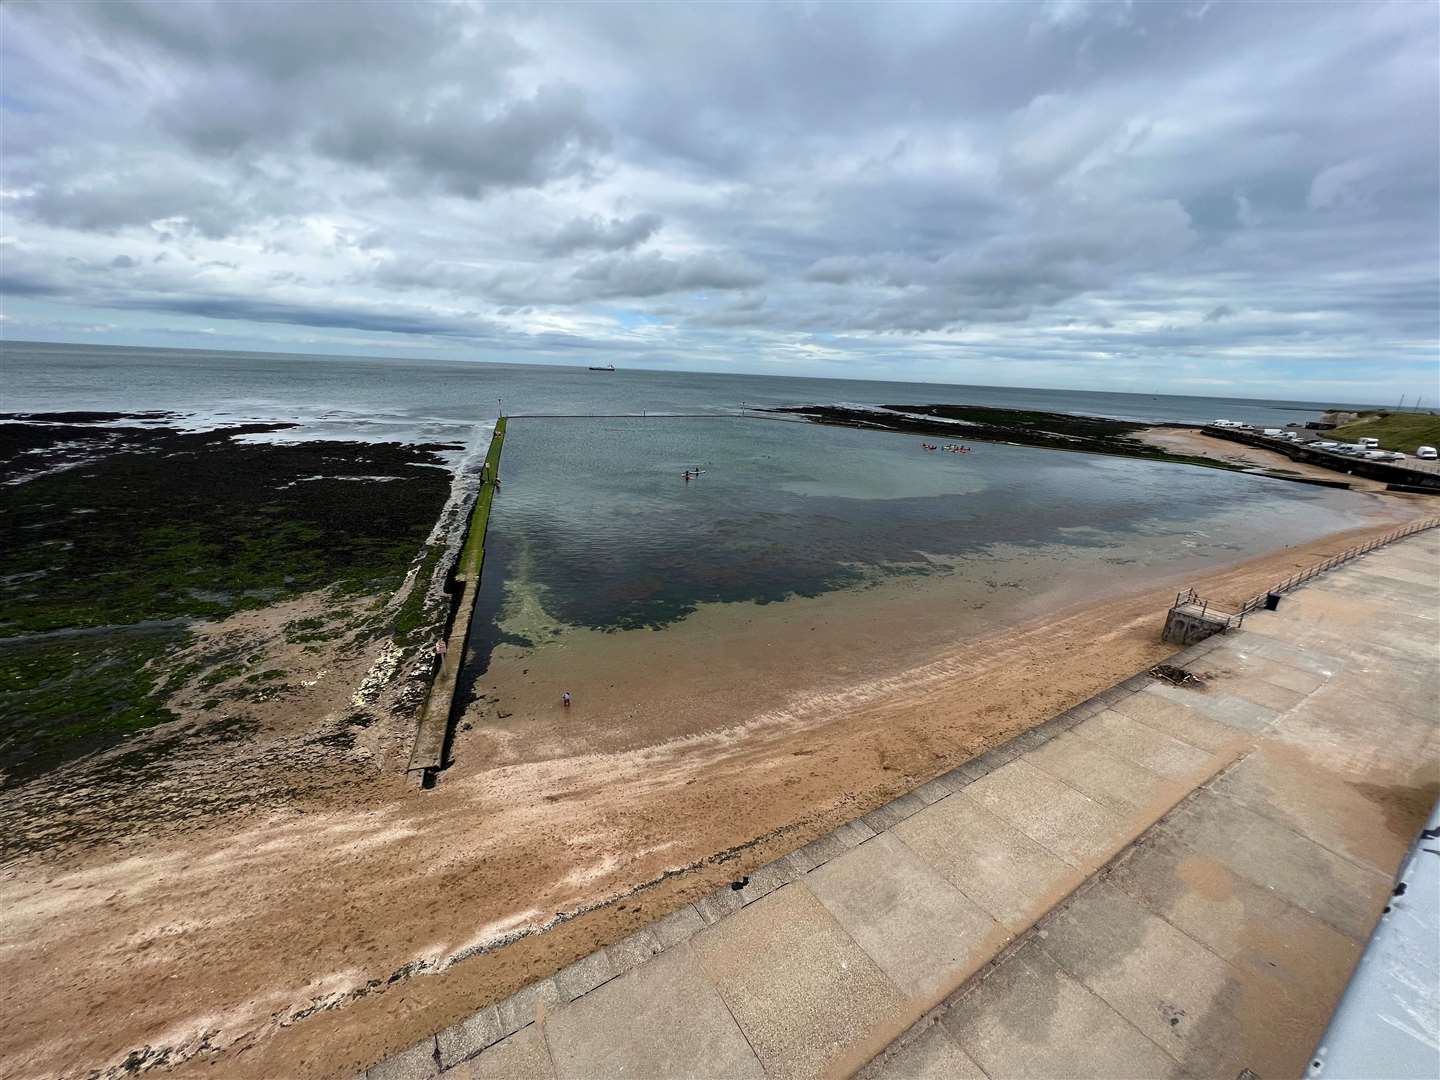 The Walpole Bay tidal pool has suffered damage